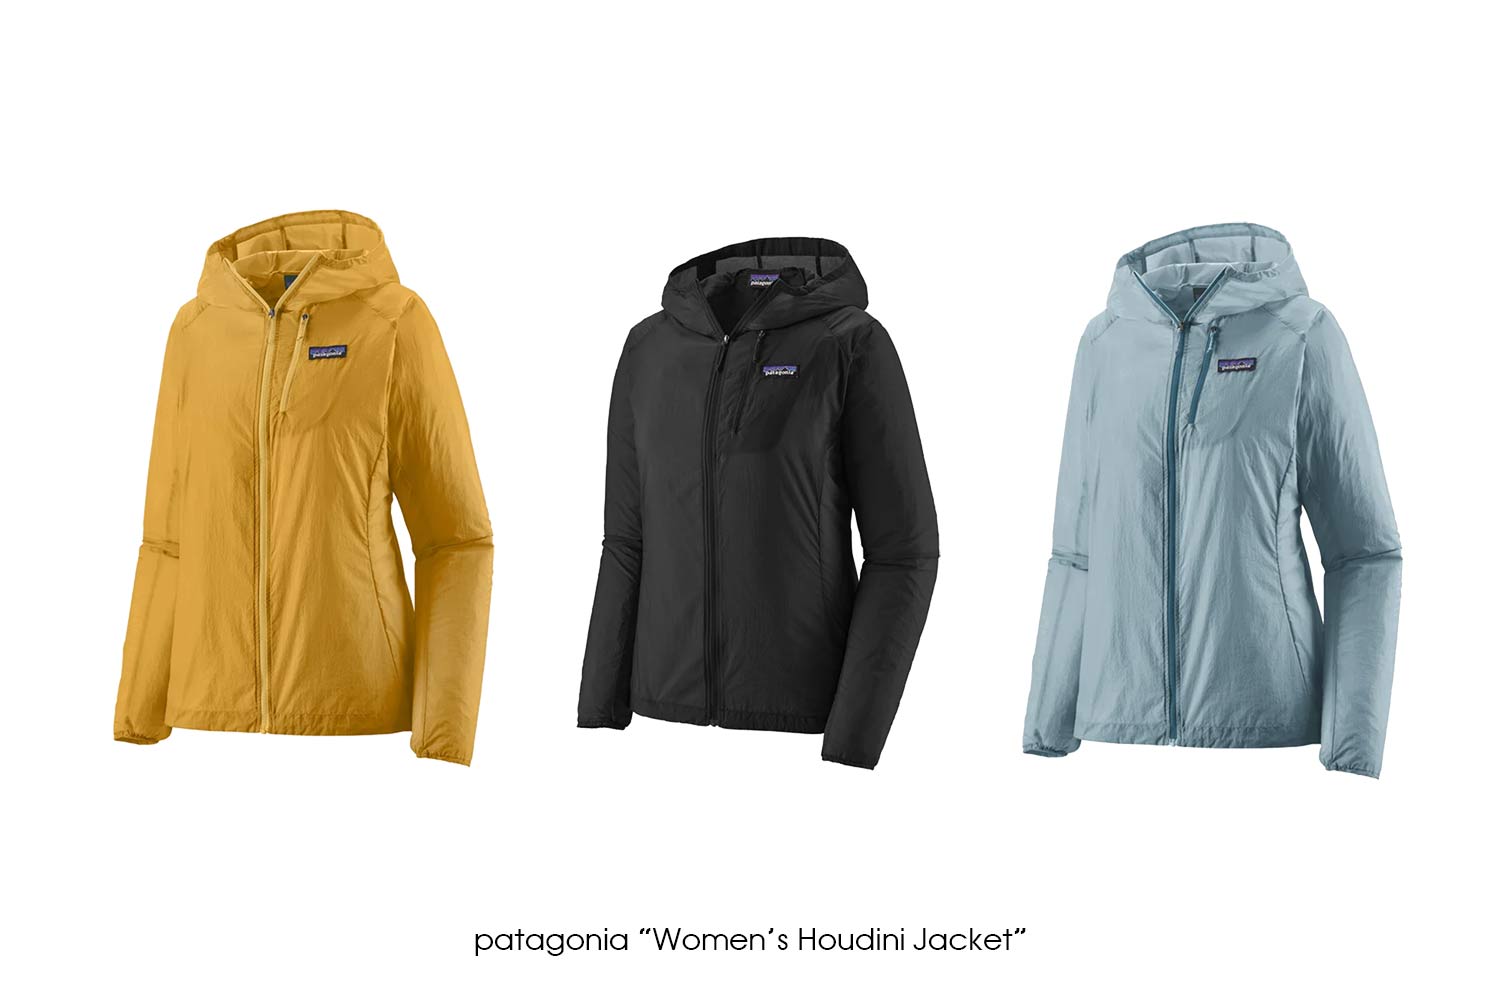 patagonia "Women's Houdini Jacket"